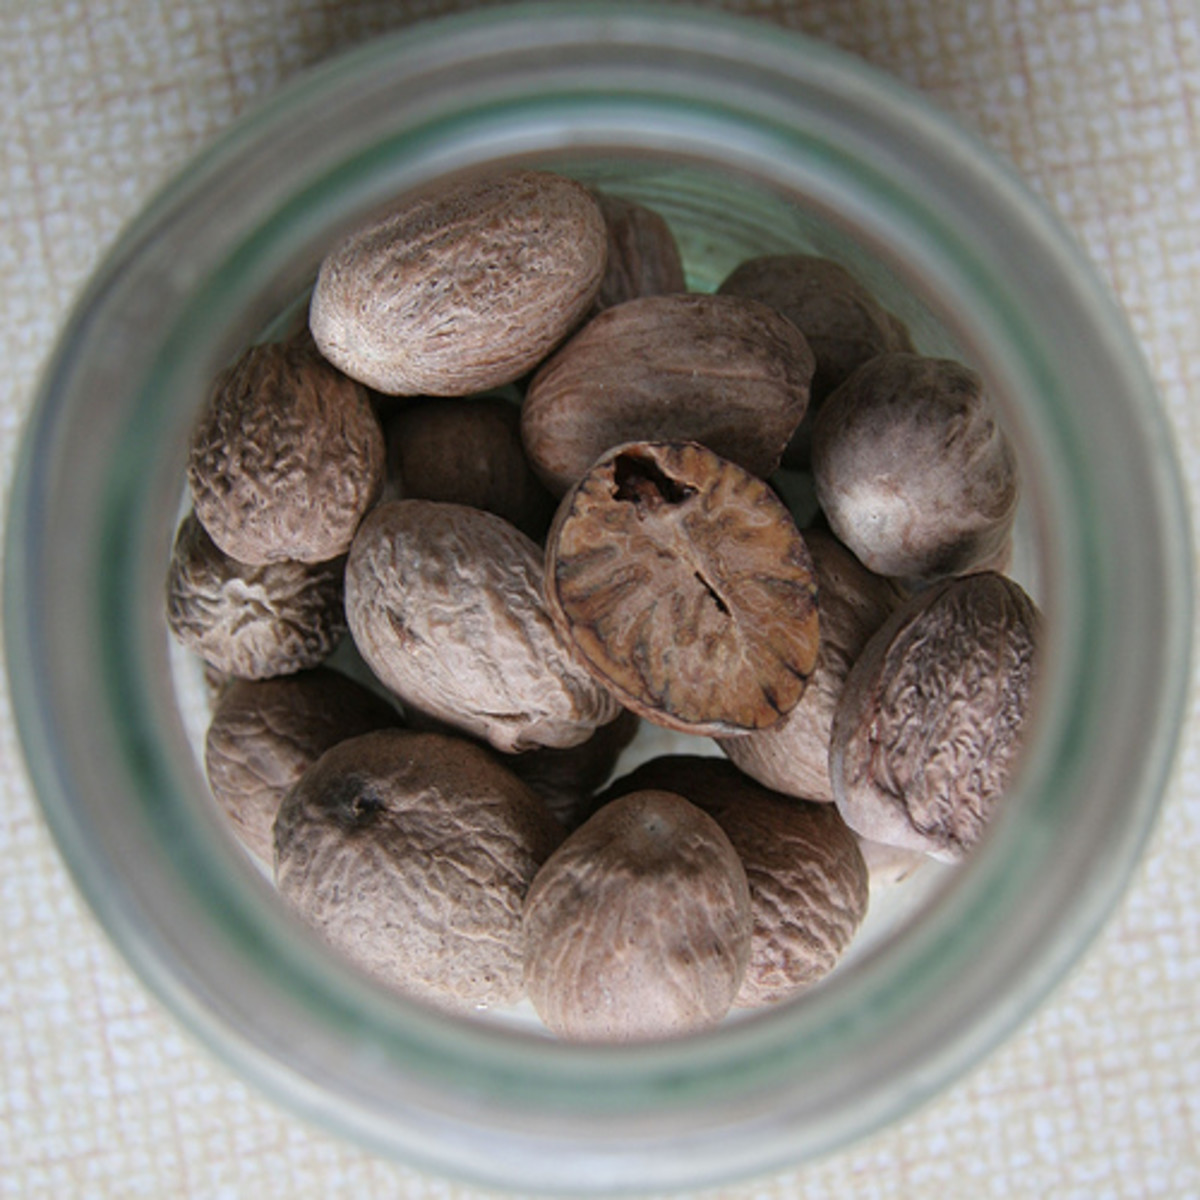 Nutmeg (Photo courtesy by exfordy from Flickr.com)